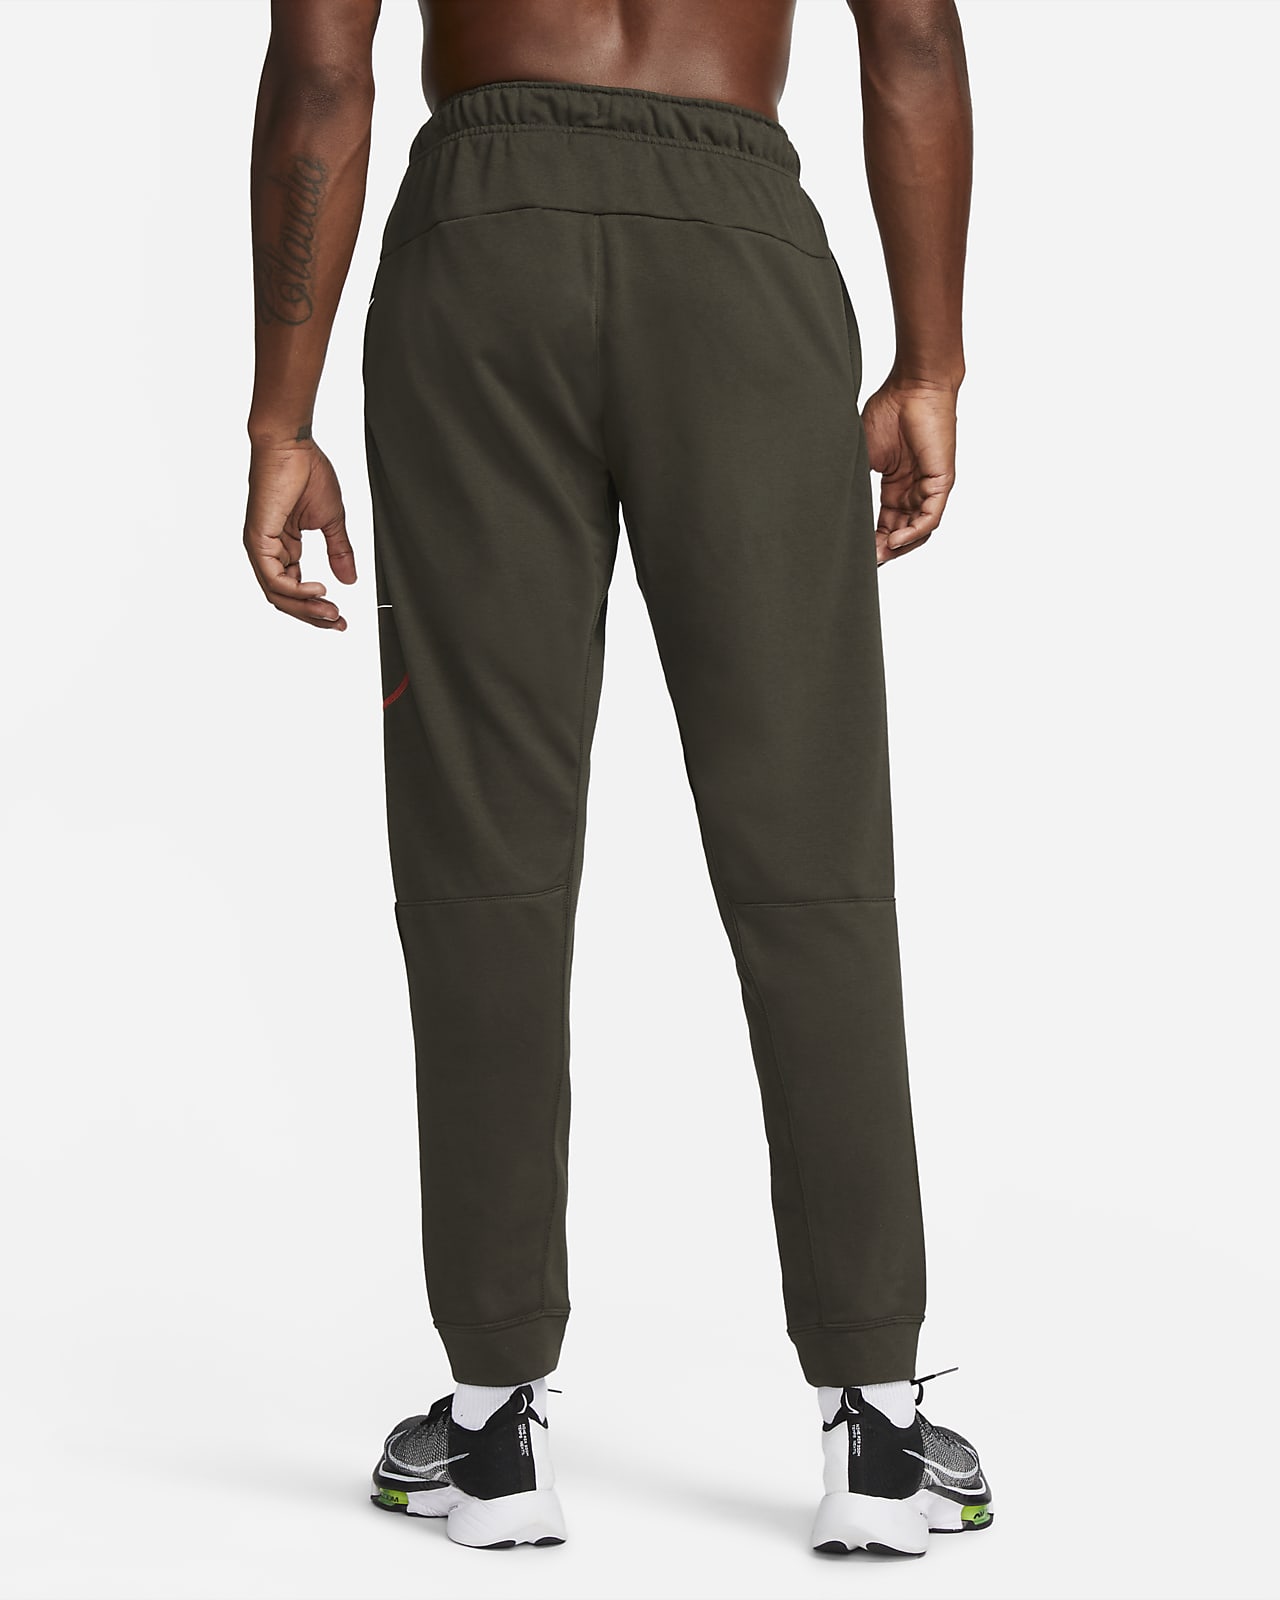 Nike Sportswear PANT - Tracksuit bottoms - pro green/white/dark green -  Zalando.de